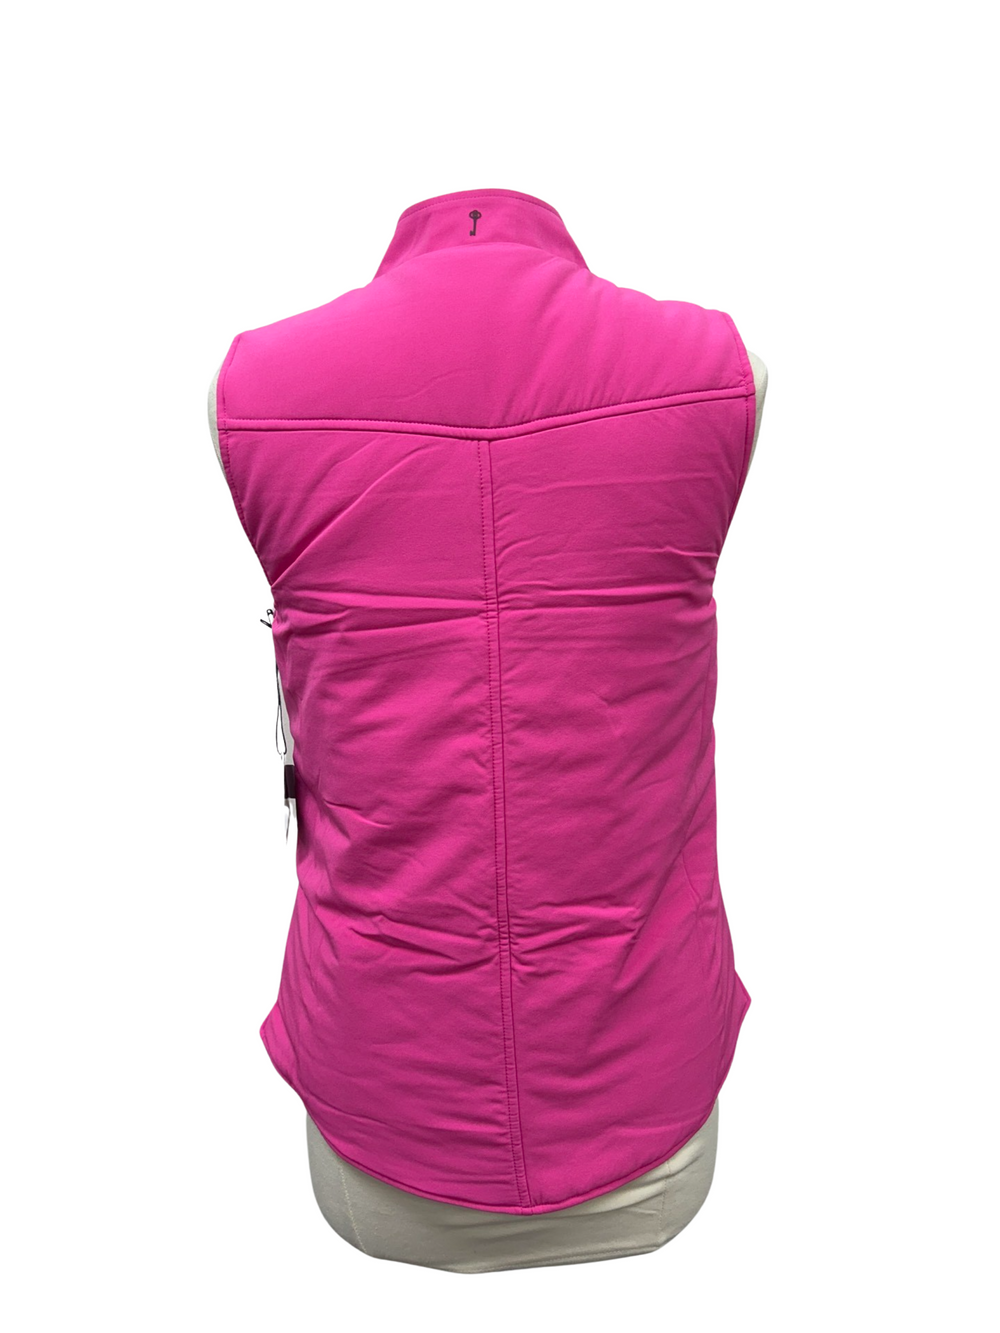 Belyn Key Reversible Vest - Hot Pink - Size Small - Skorzie